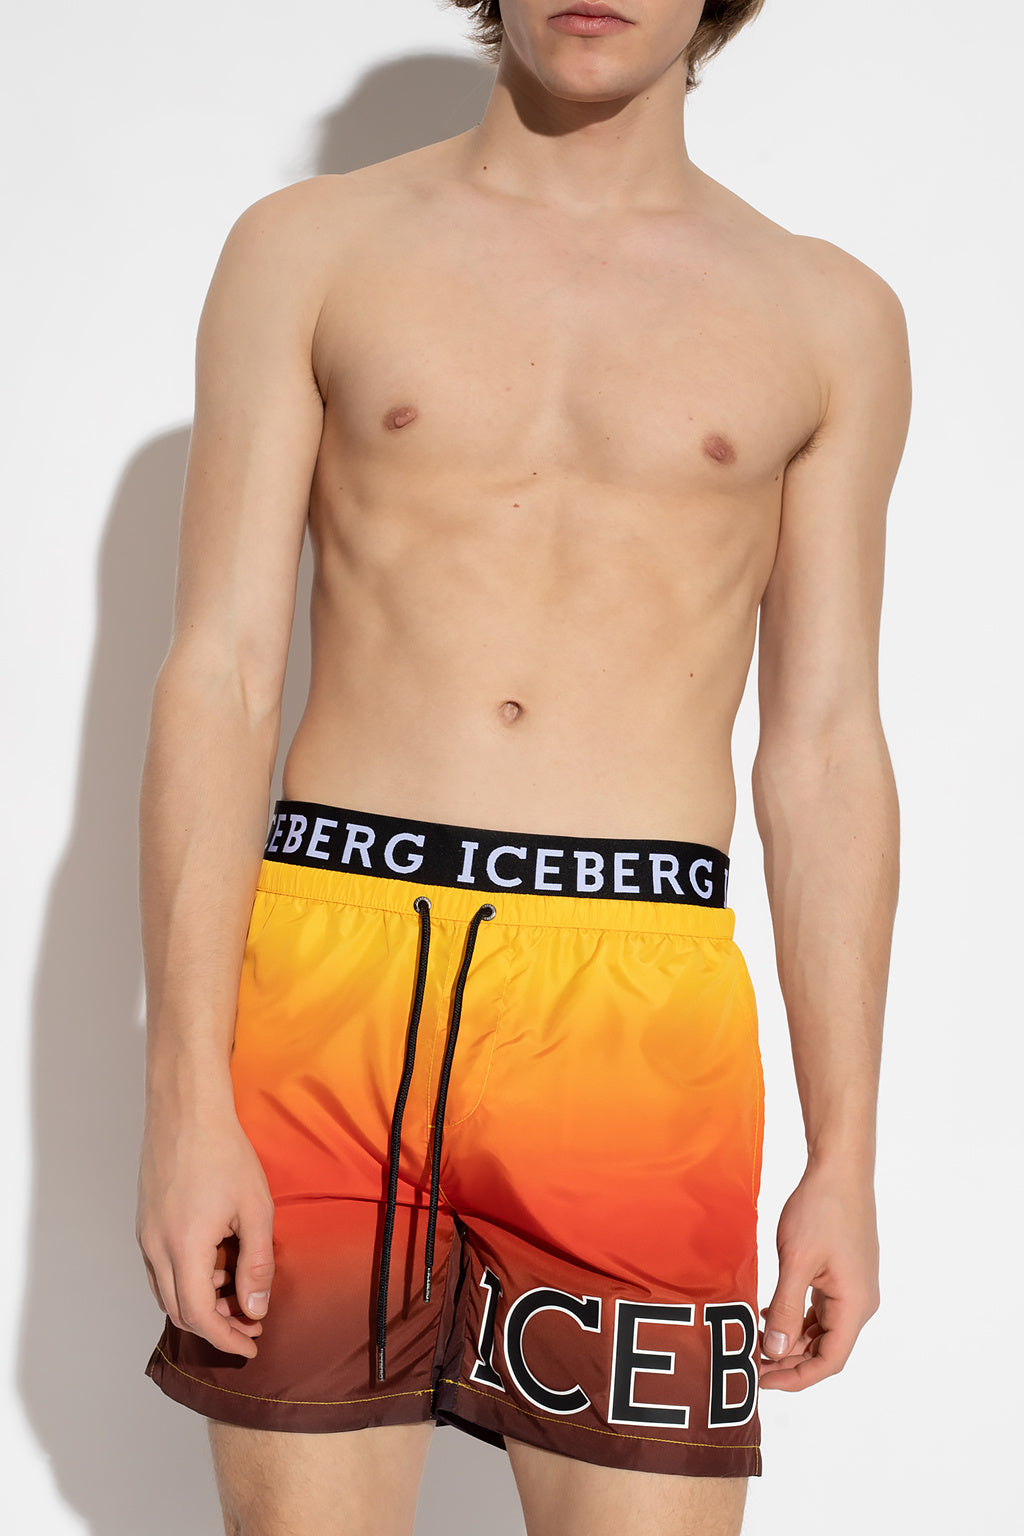 Iceberg Beachwear Swimwear